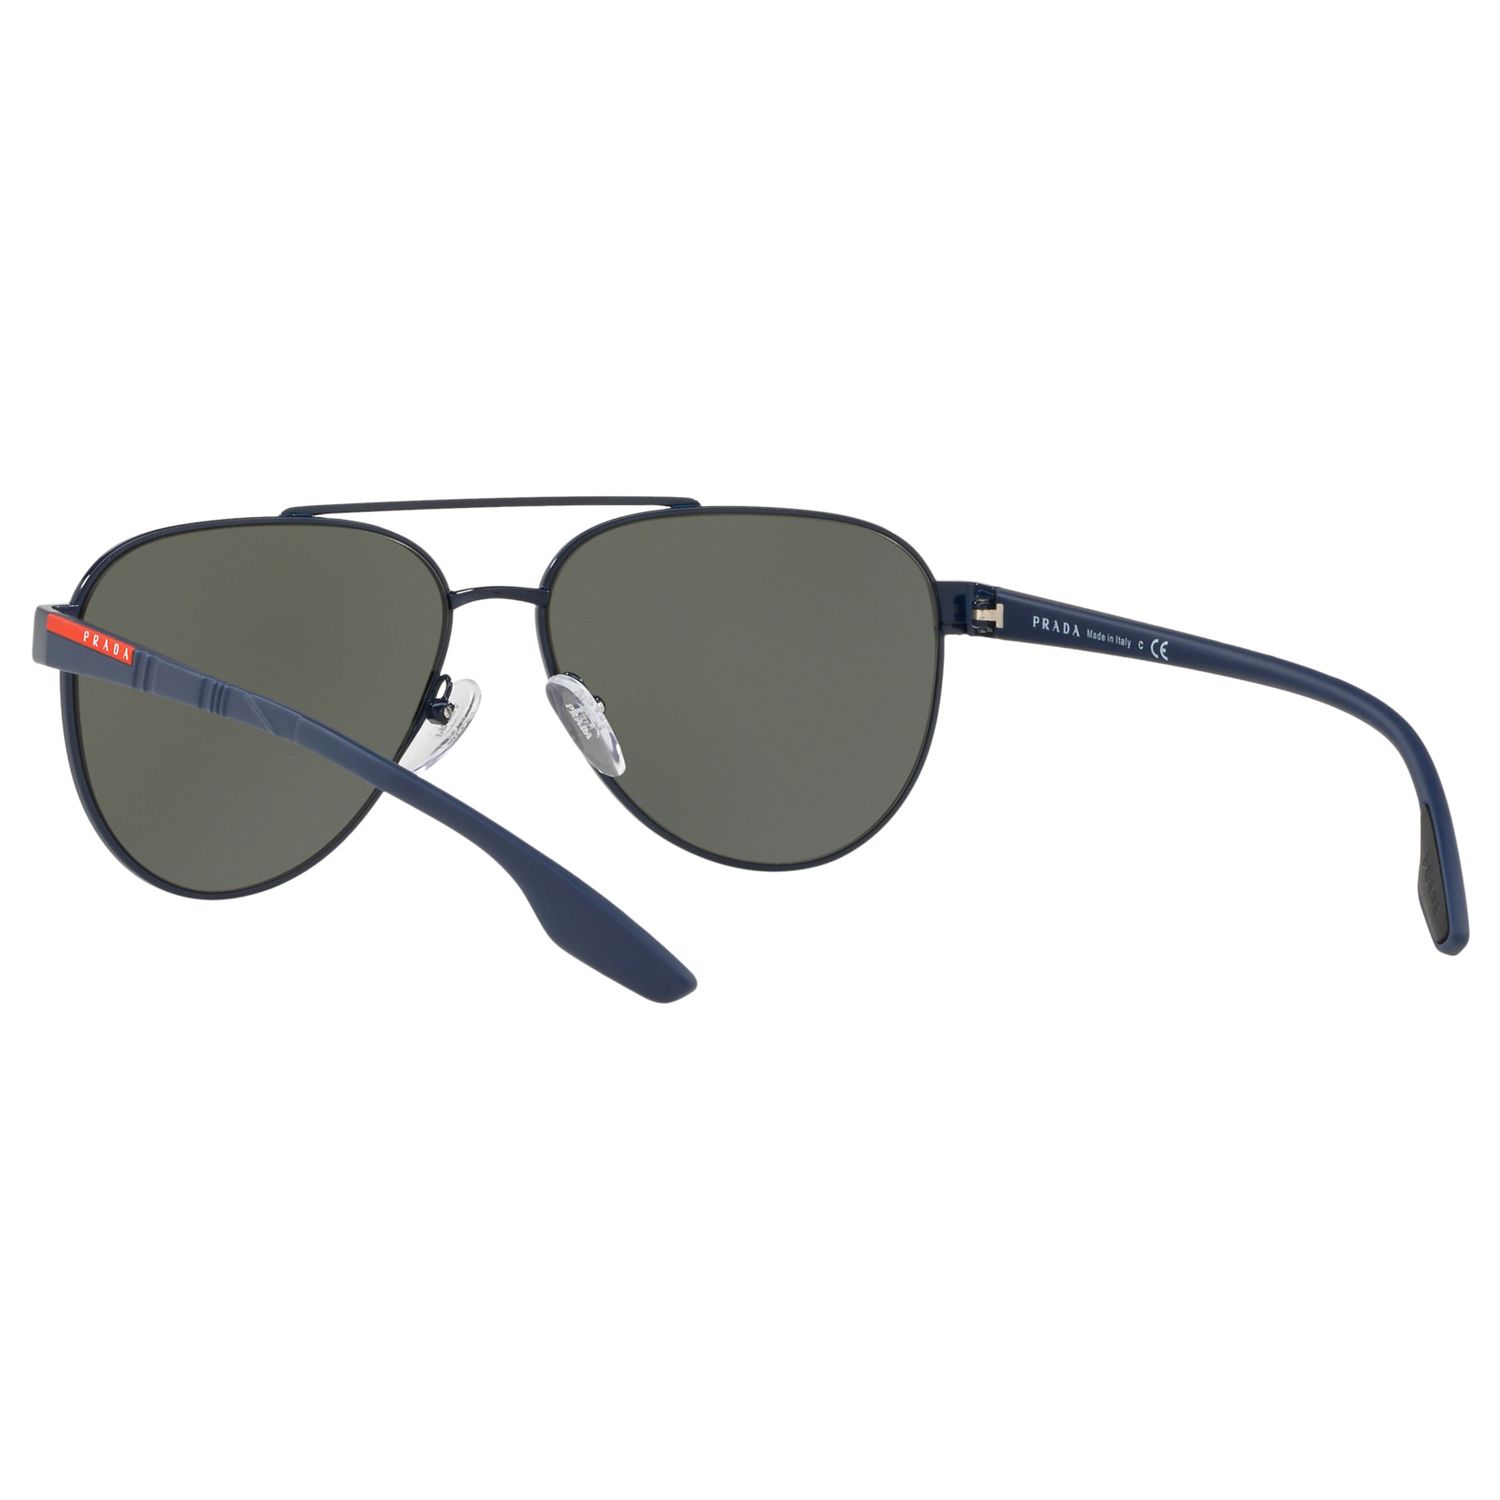 Prada Linea Rossa PS 54TS Men's Aviator Sunglasses, Navy/Mirror Green at John Lewis & Partners